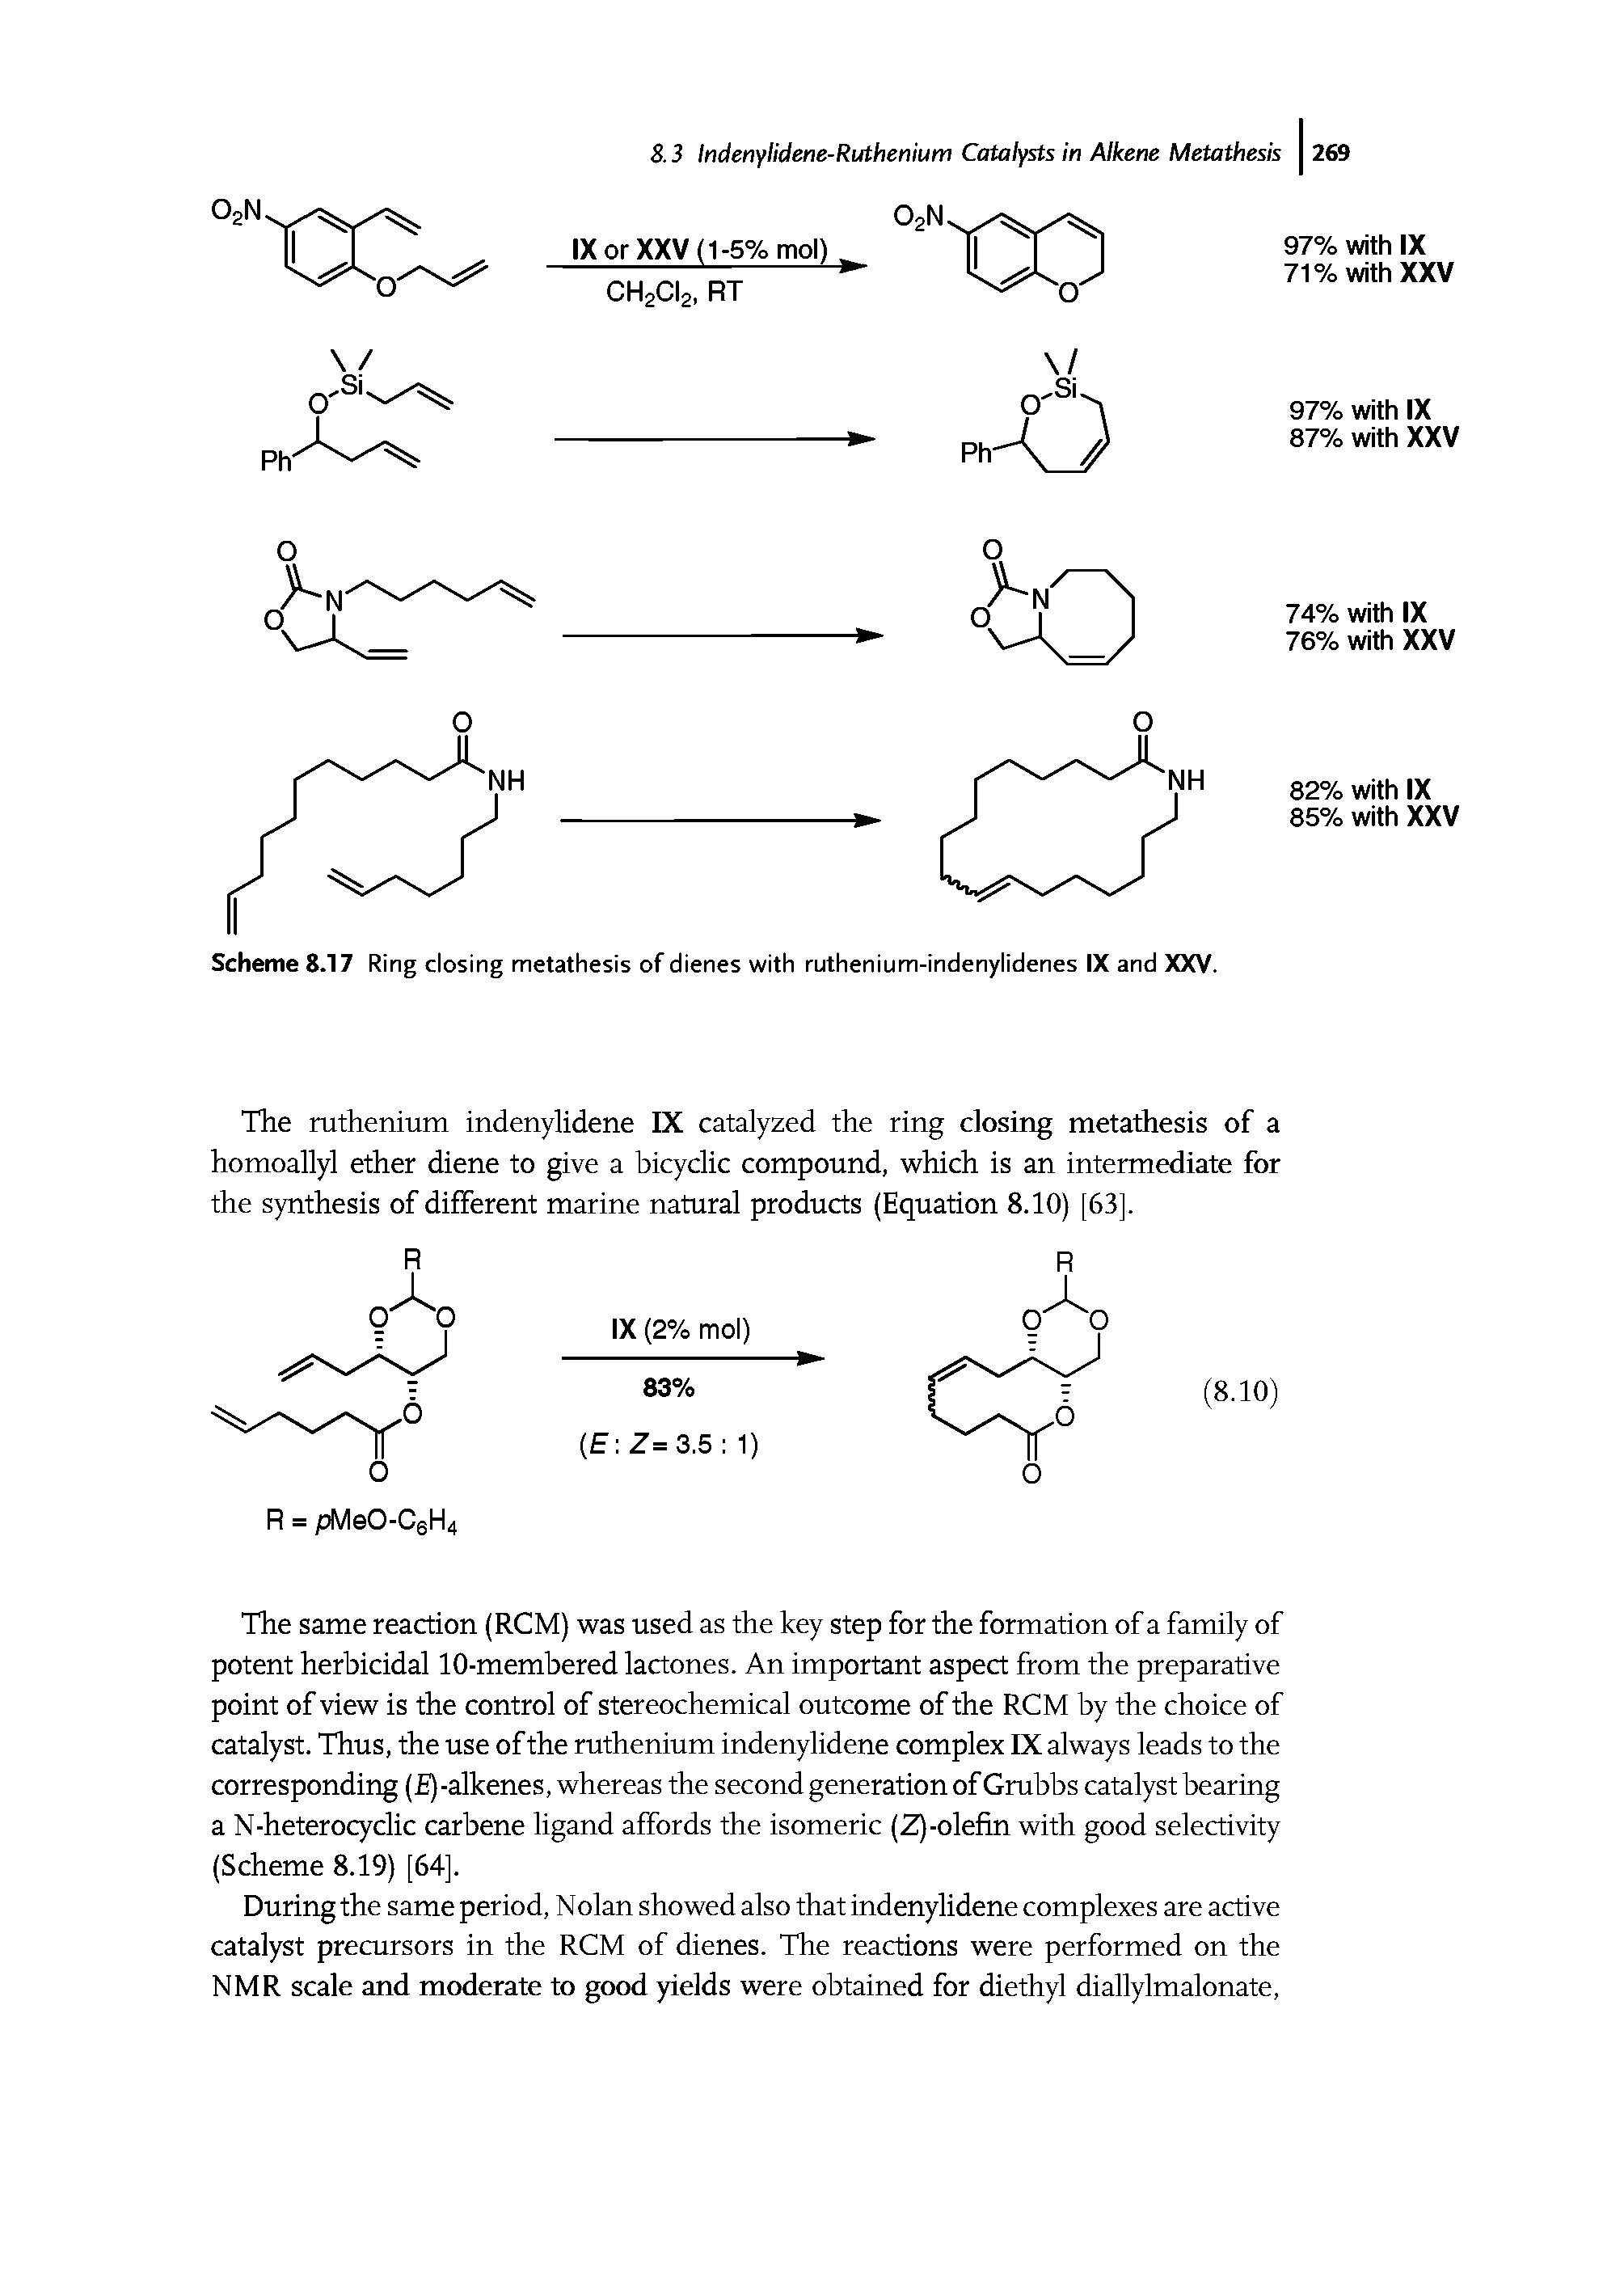 Scheme 8.17 Ring closing metathesis of dienes with ruthenium-indenylidenes IX and XXV.